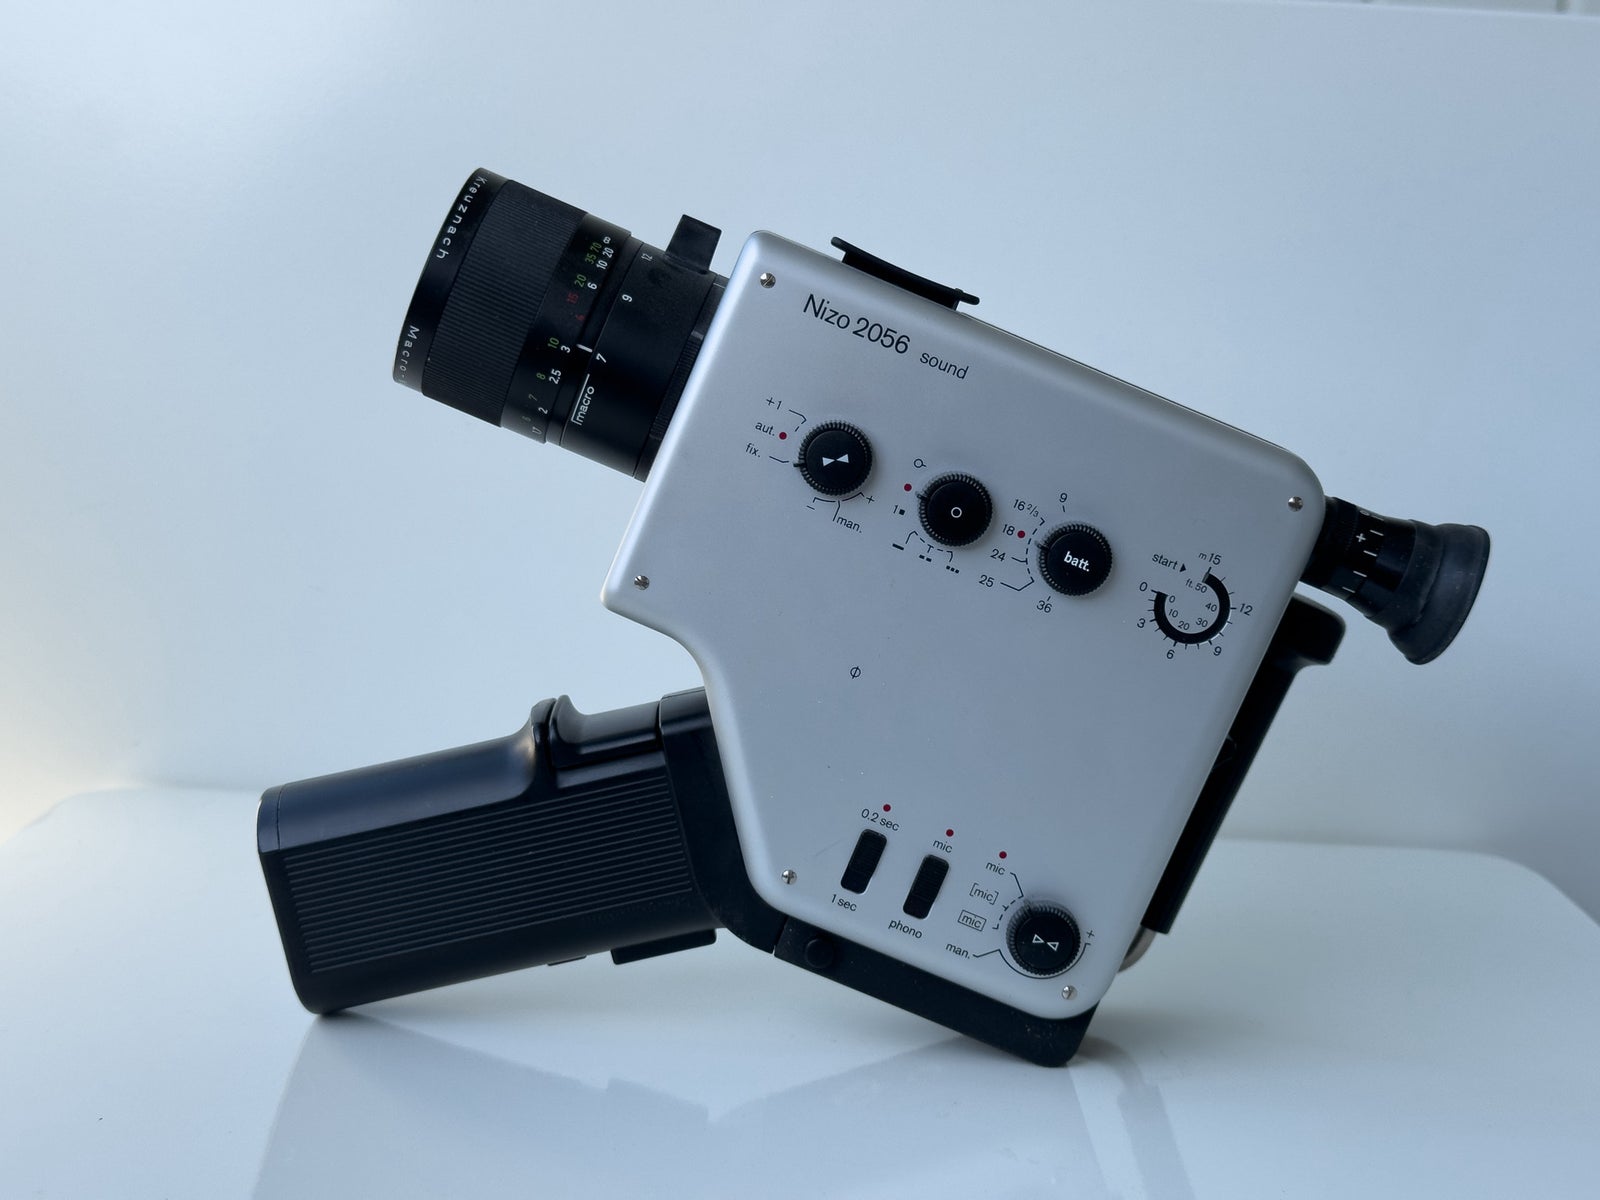 8mm film kamera, Braun NIZO 2056, God